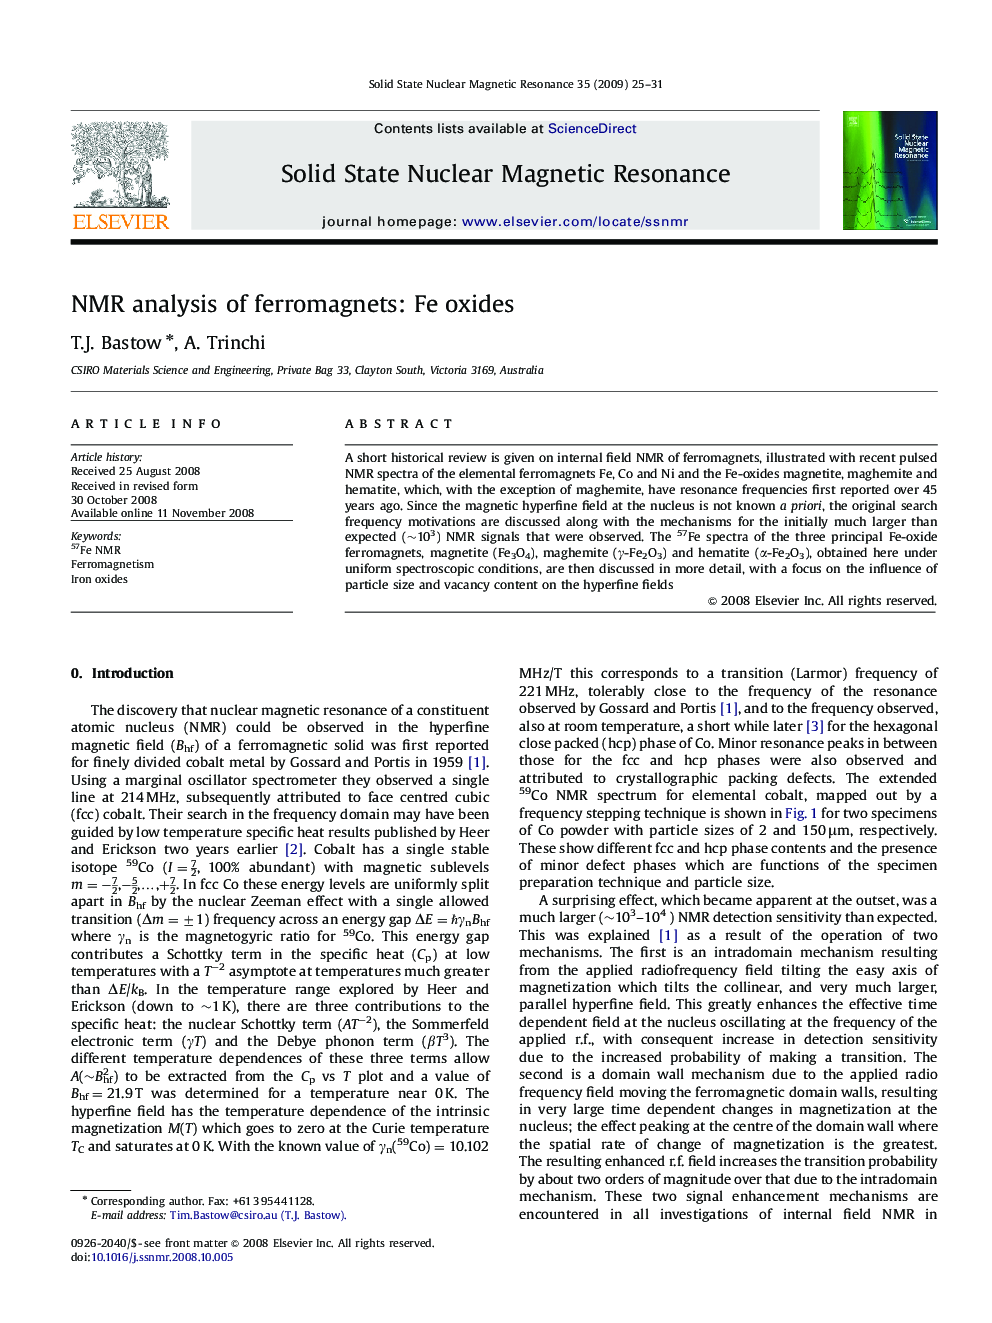 NMR analysis of ferromagnets: Fe oxides